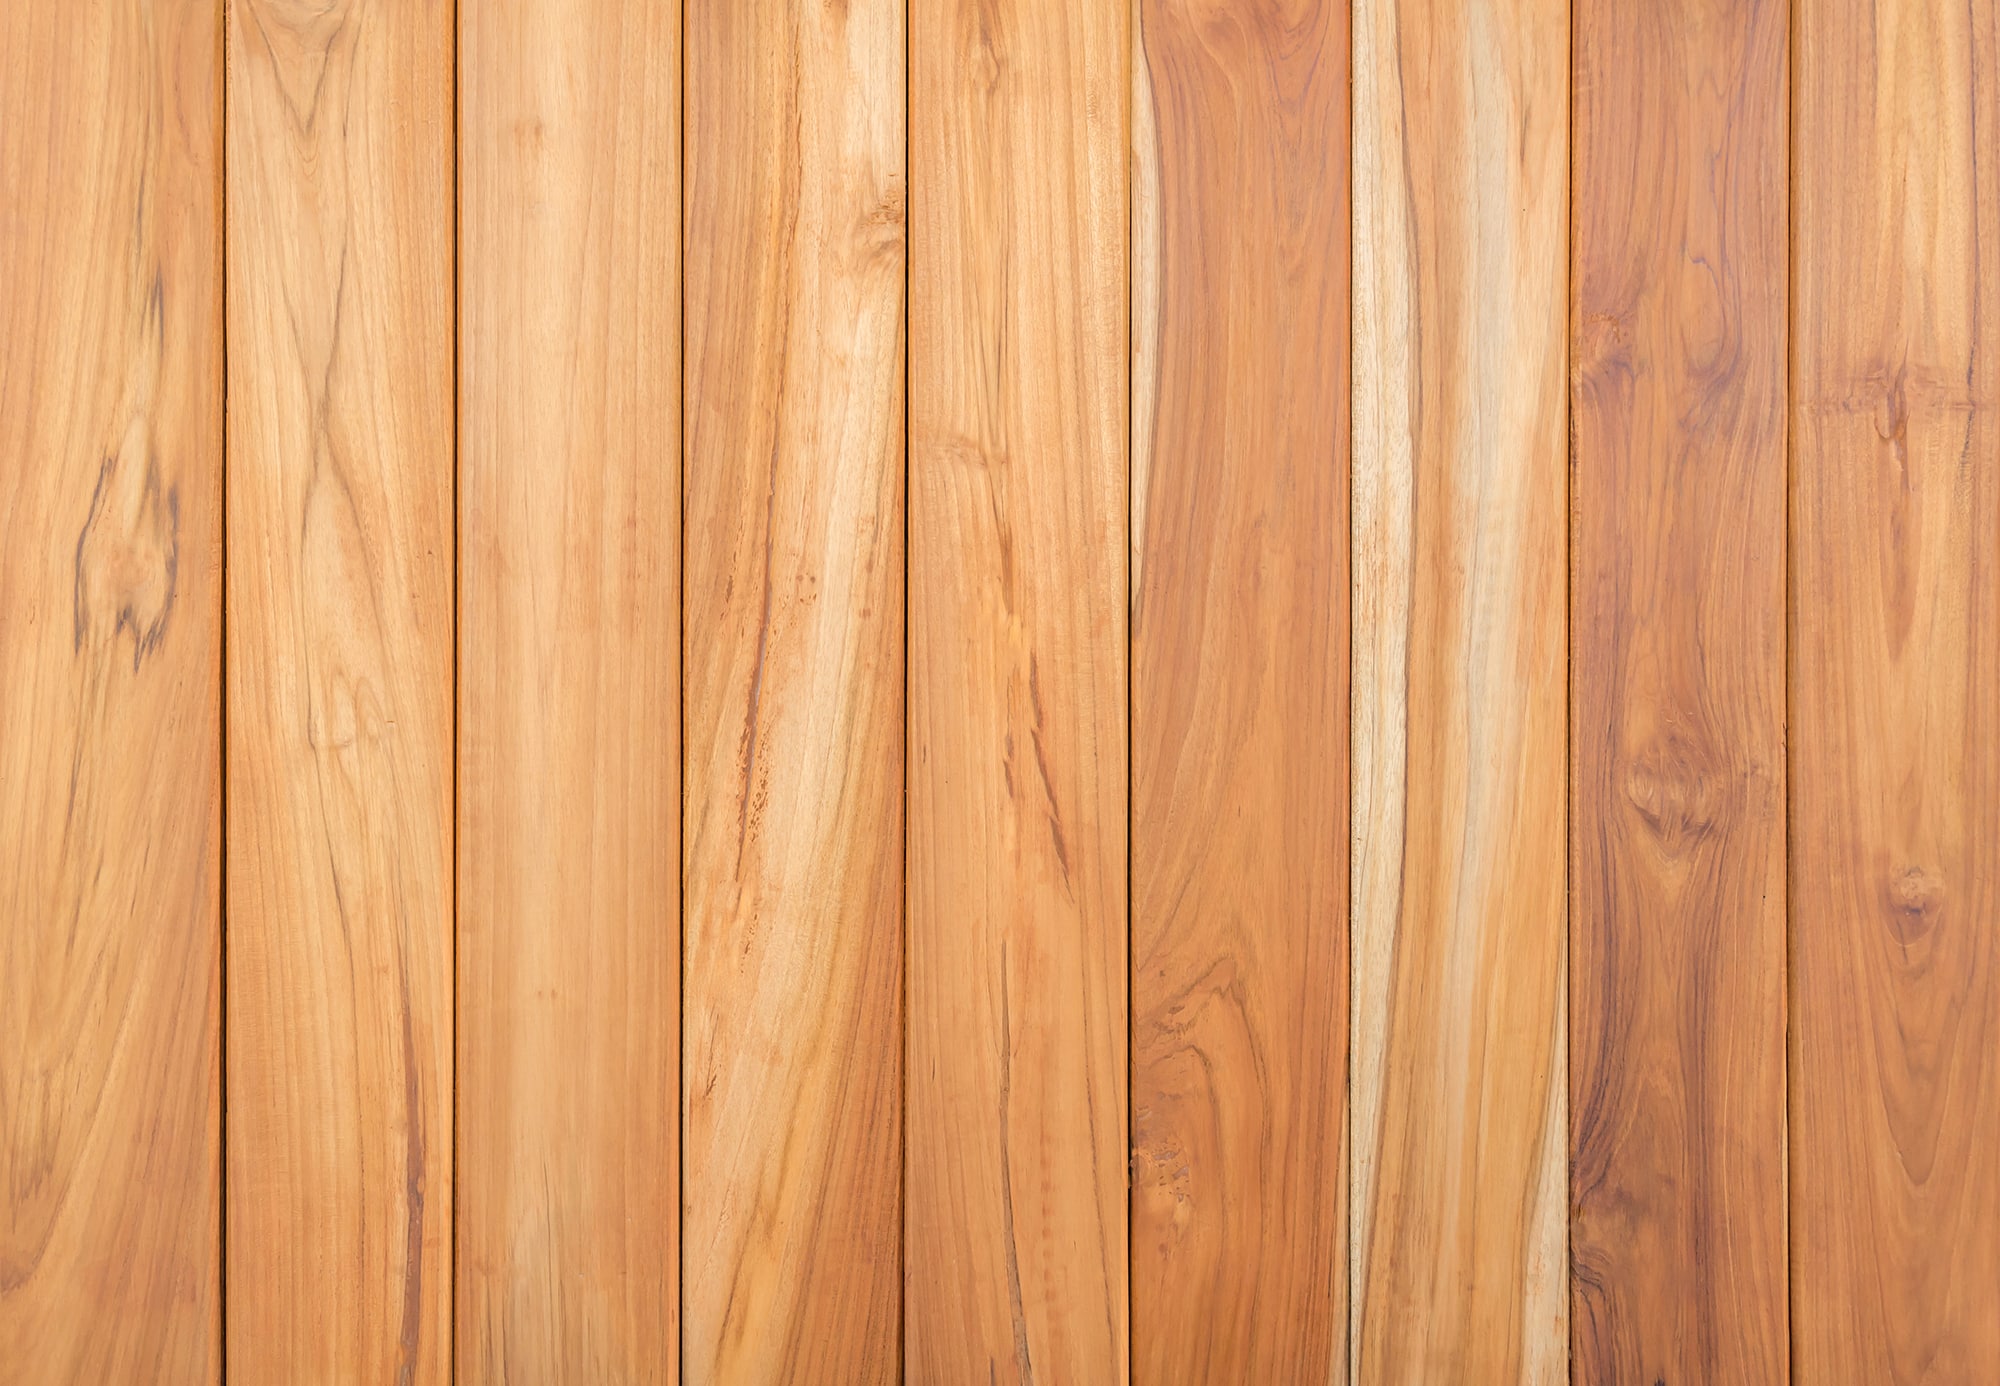 Simonson Lumber wood materials for deck